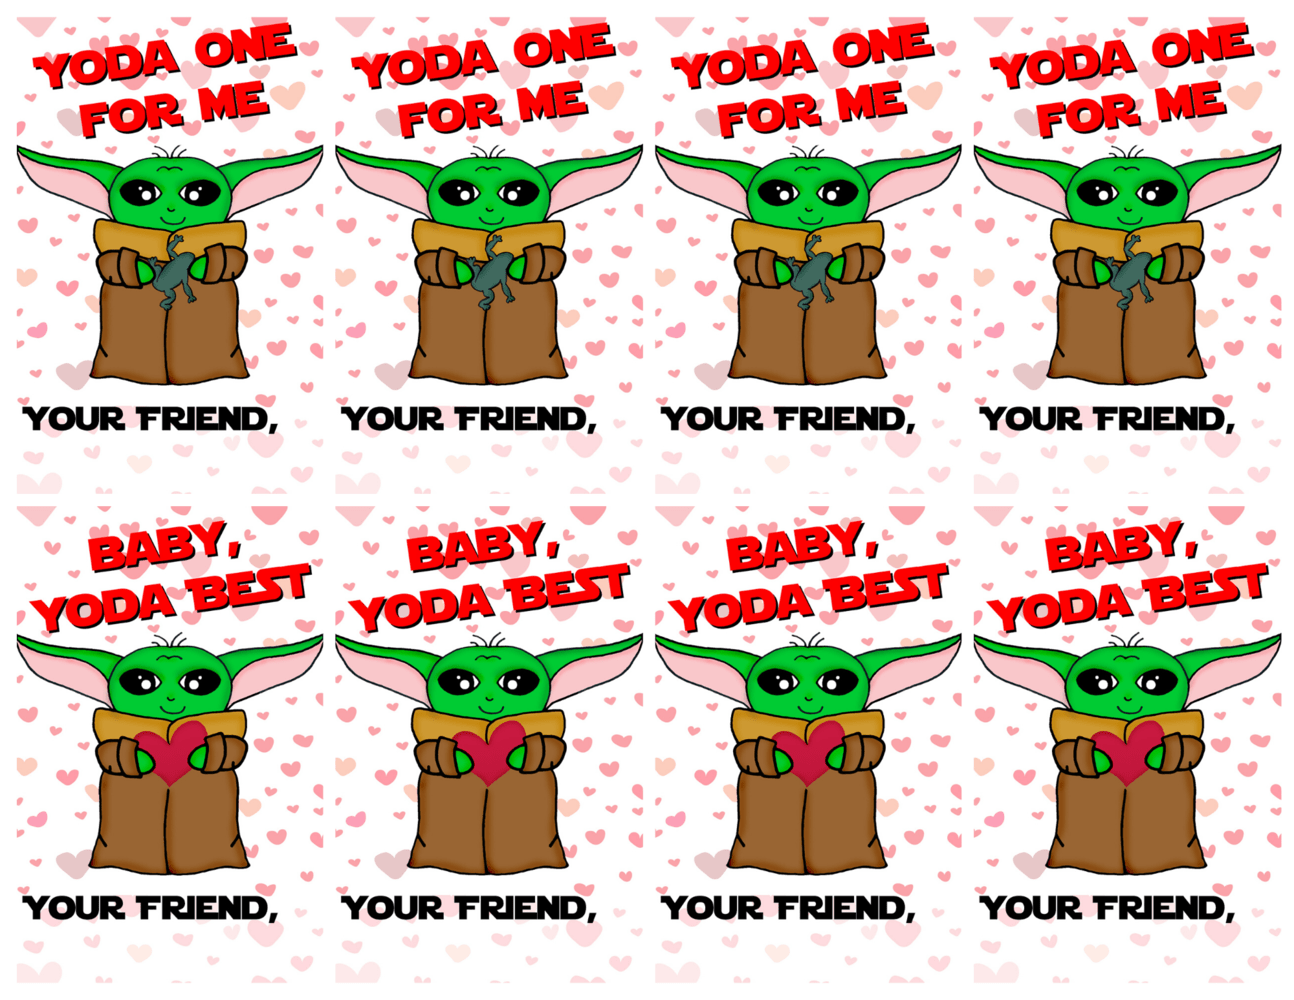 Baby Yoda Drawing Valentines